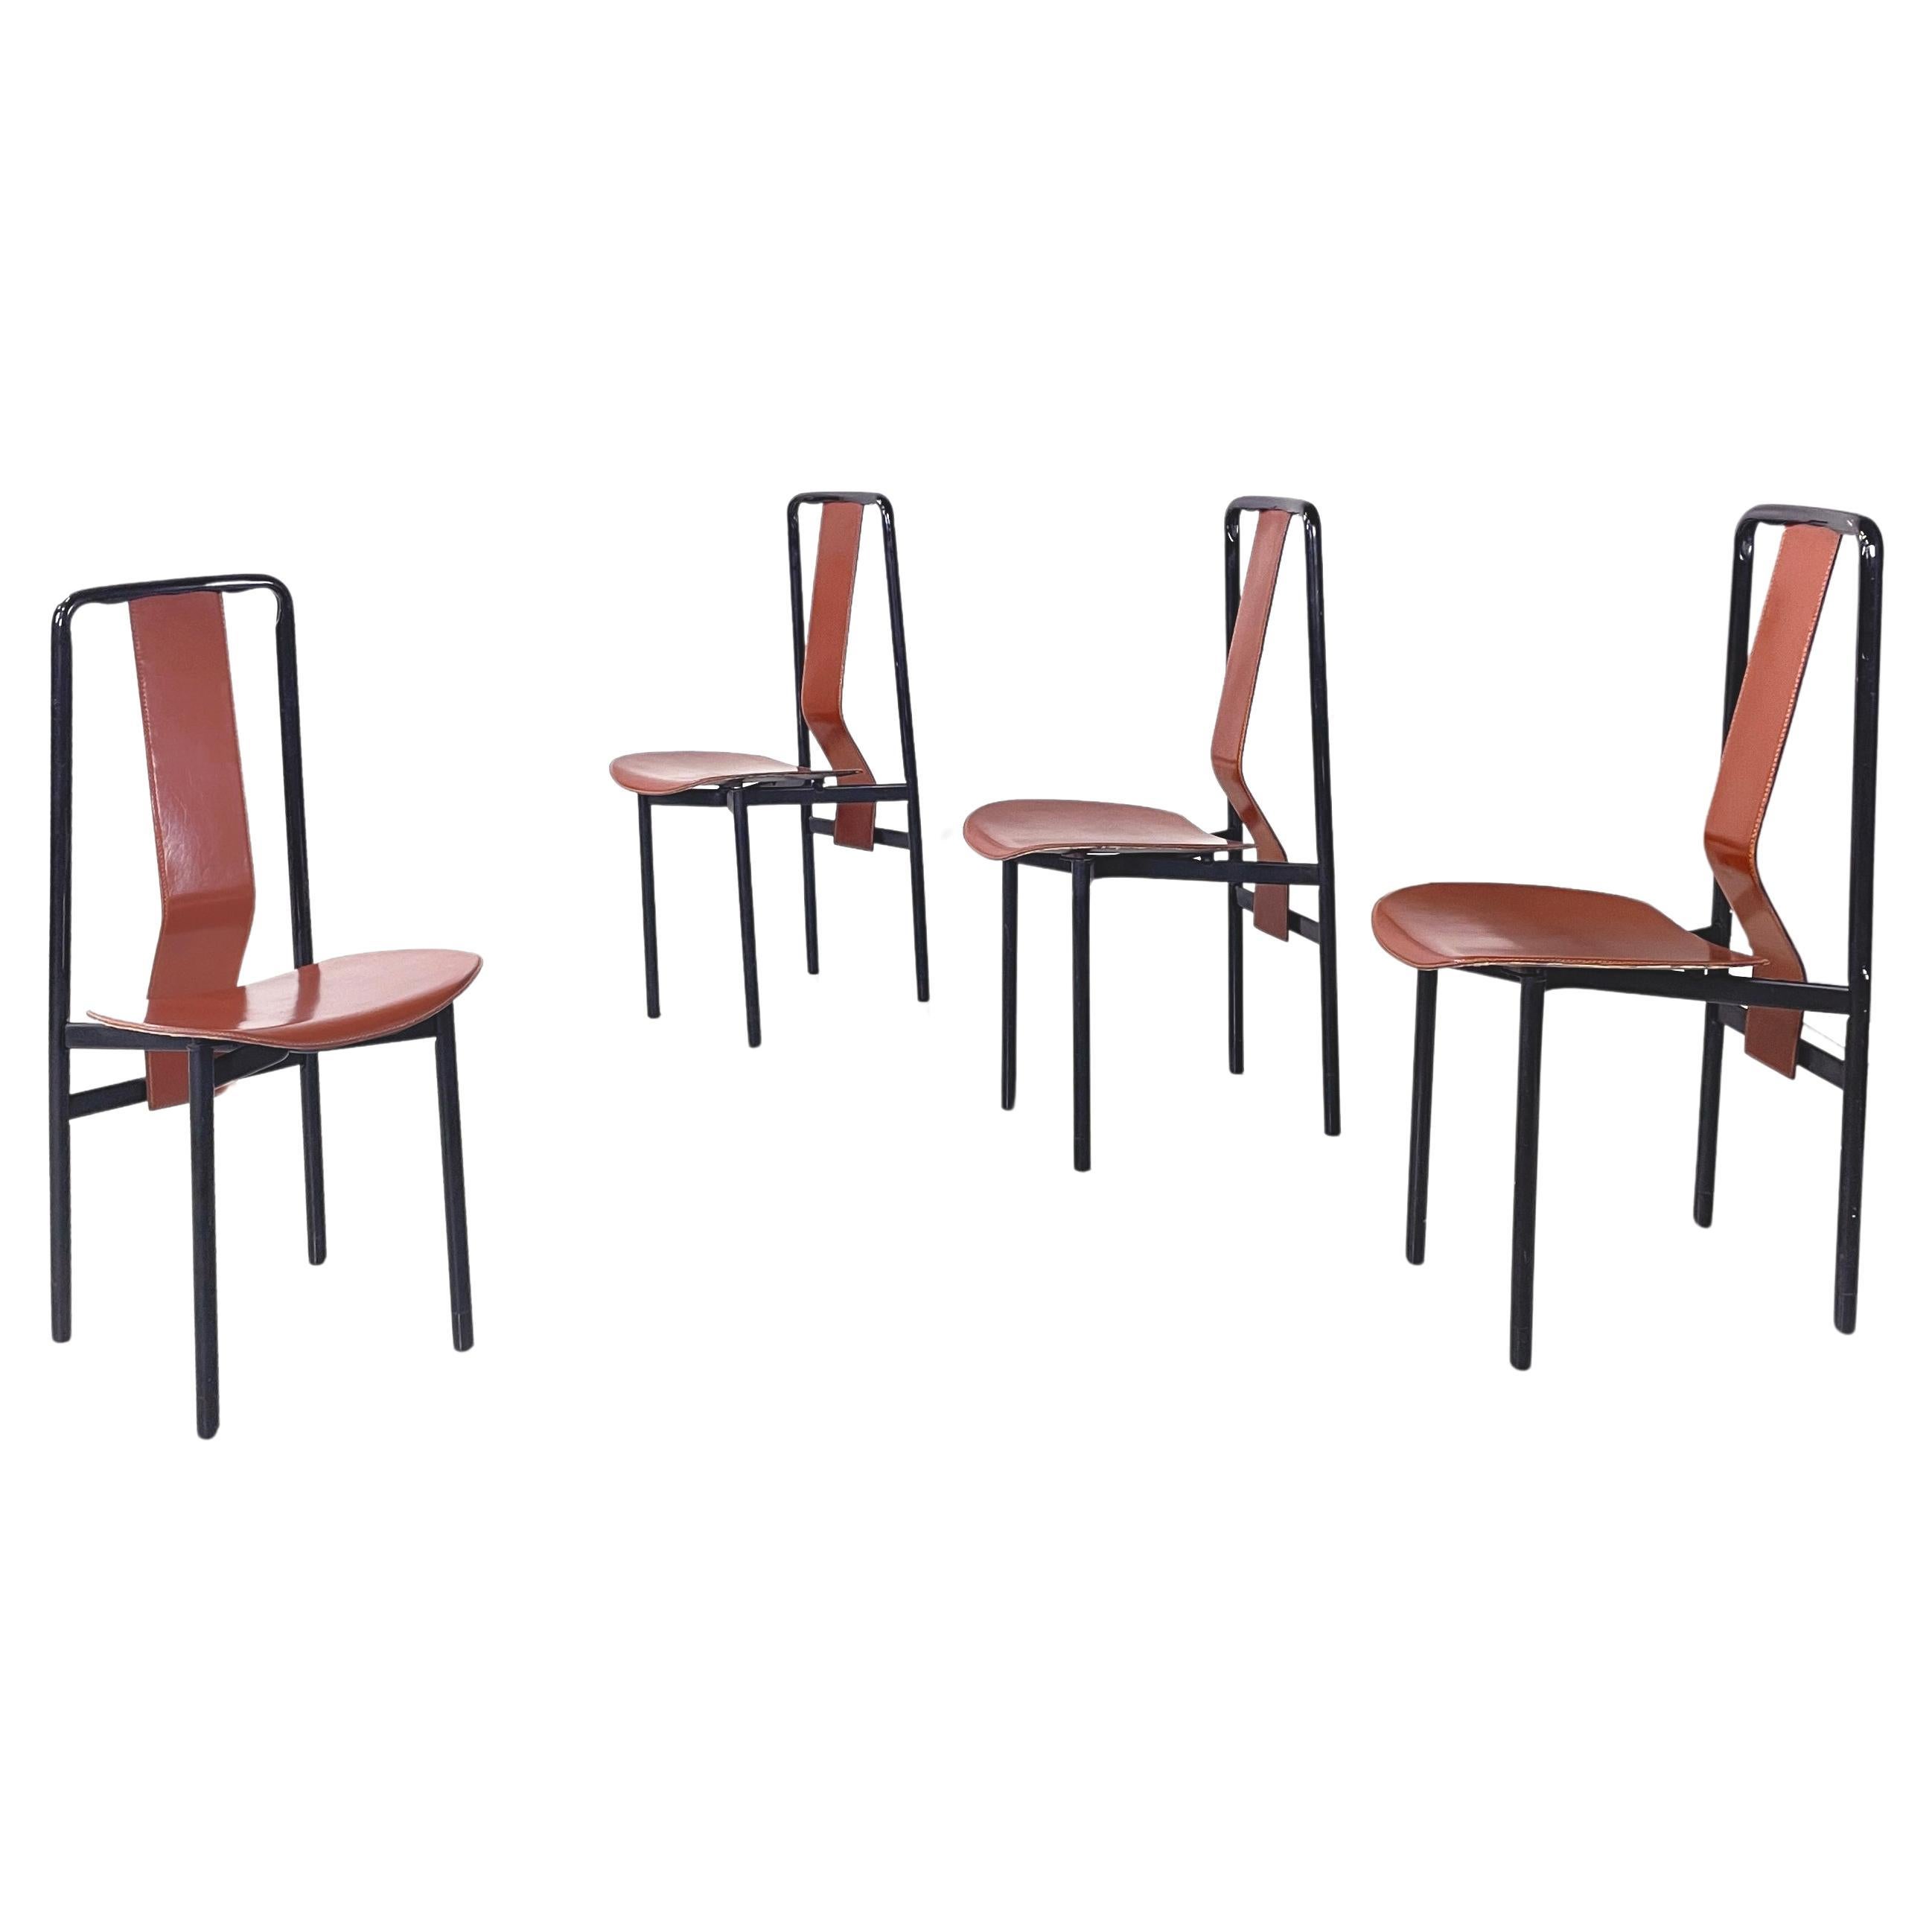 Italian modern Brown leather Chairs Irma by Castiglioni for Zanotta, 1970s For Sale